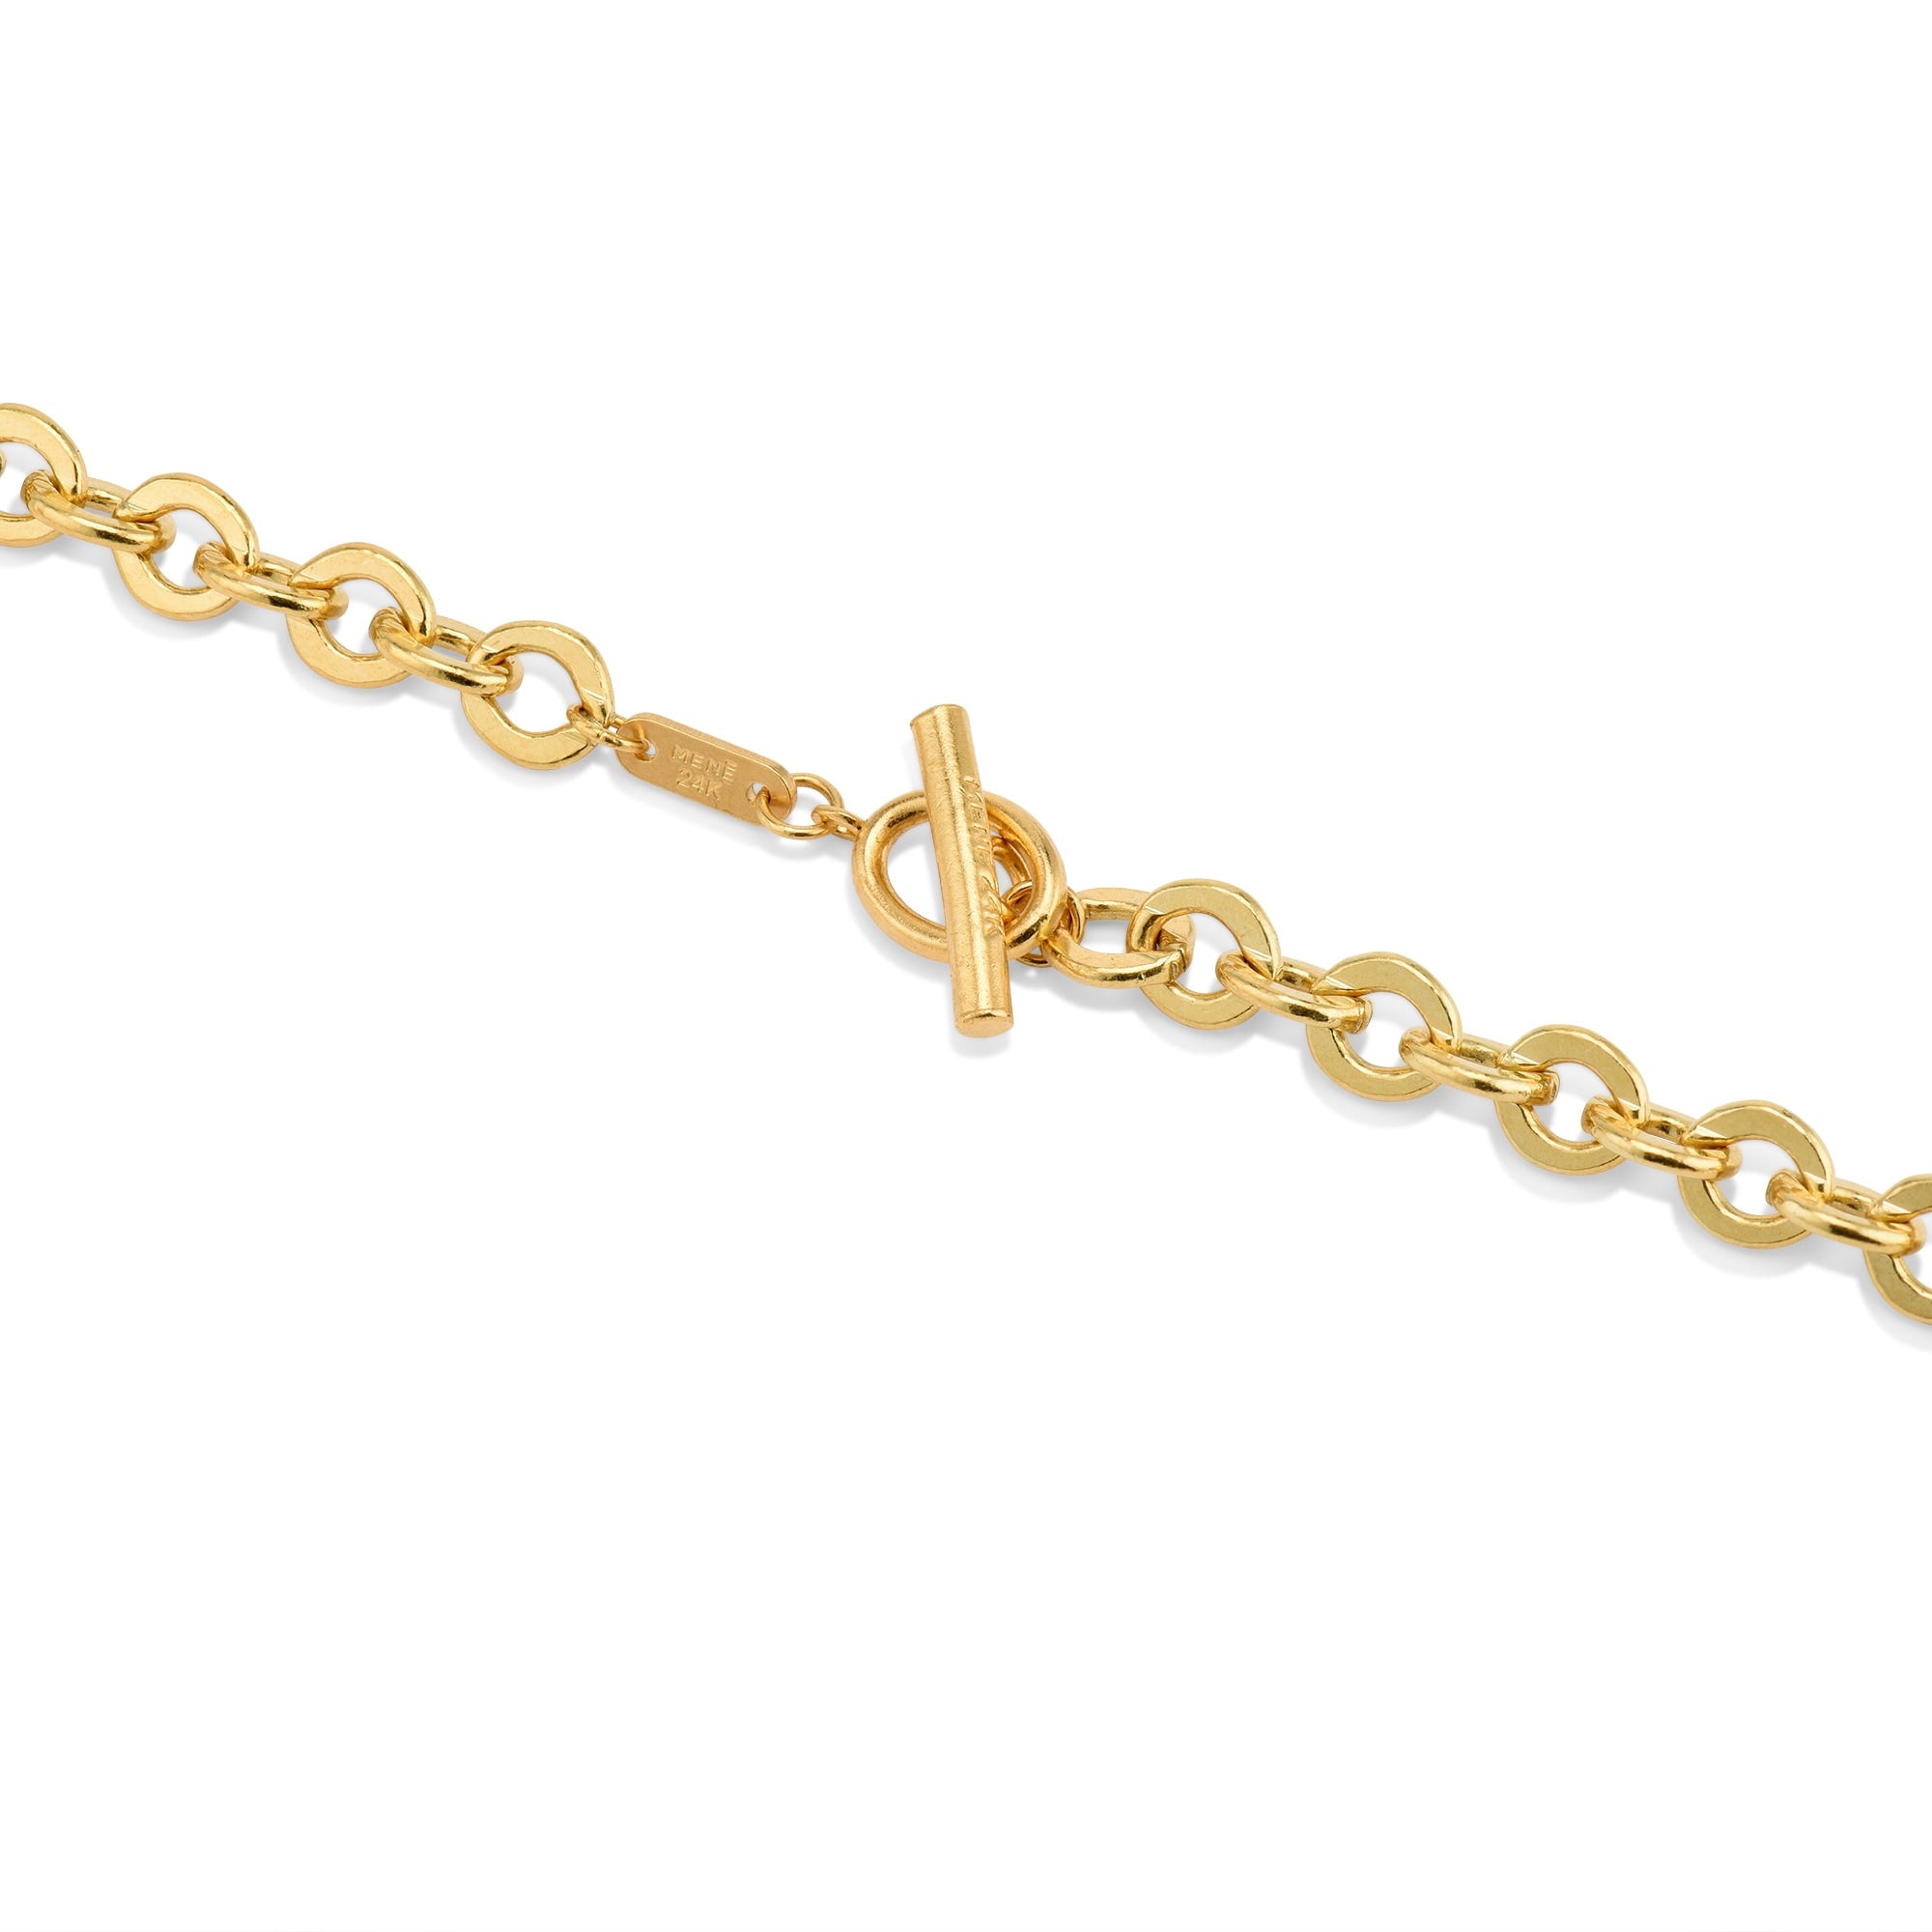 Menē Heavy Cable Chain - 24 Karat Gold 21 / 24K Gold